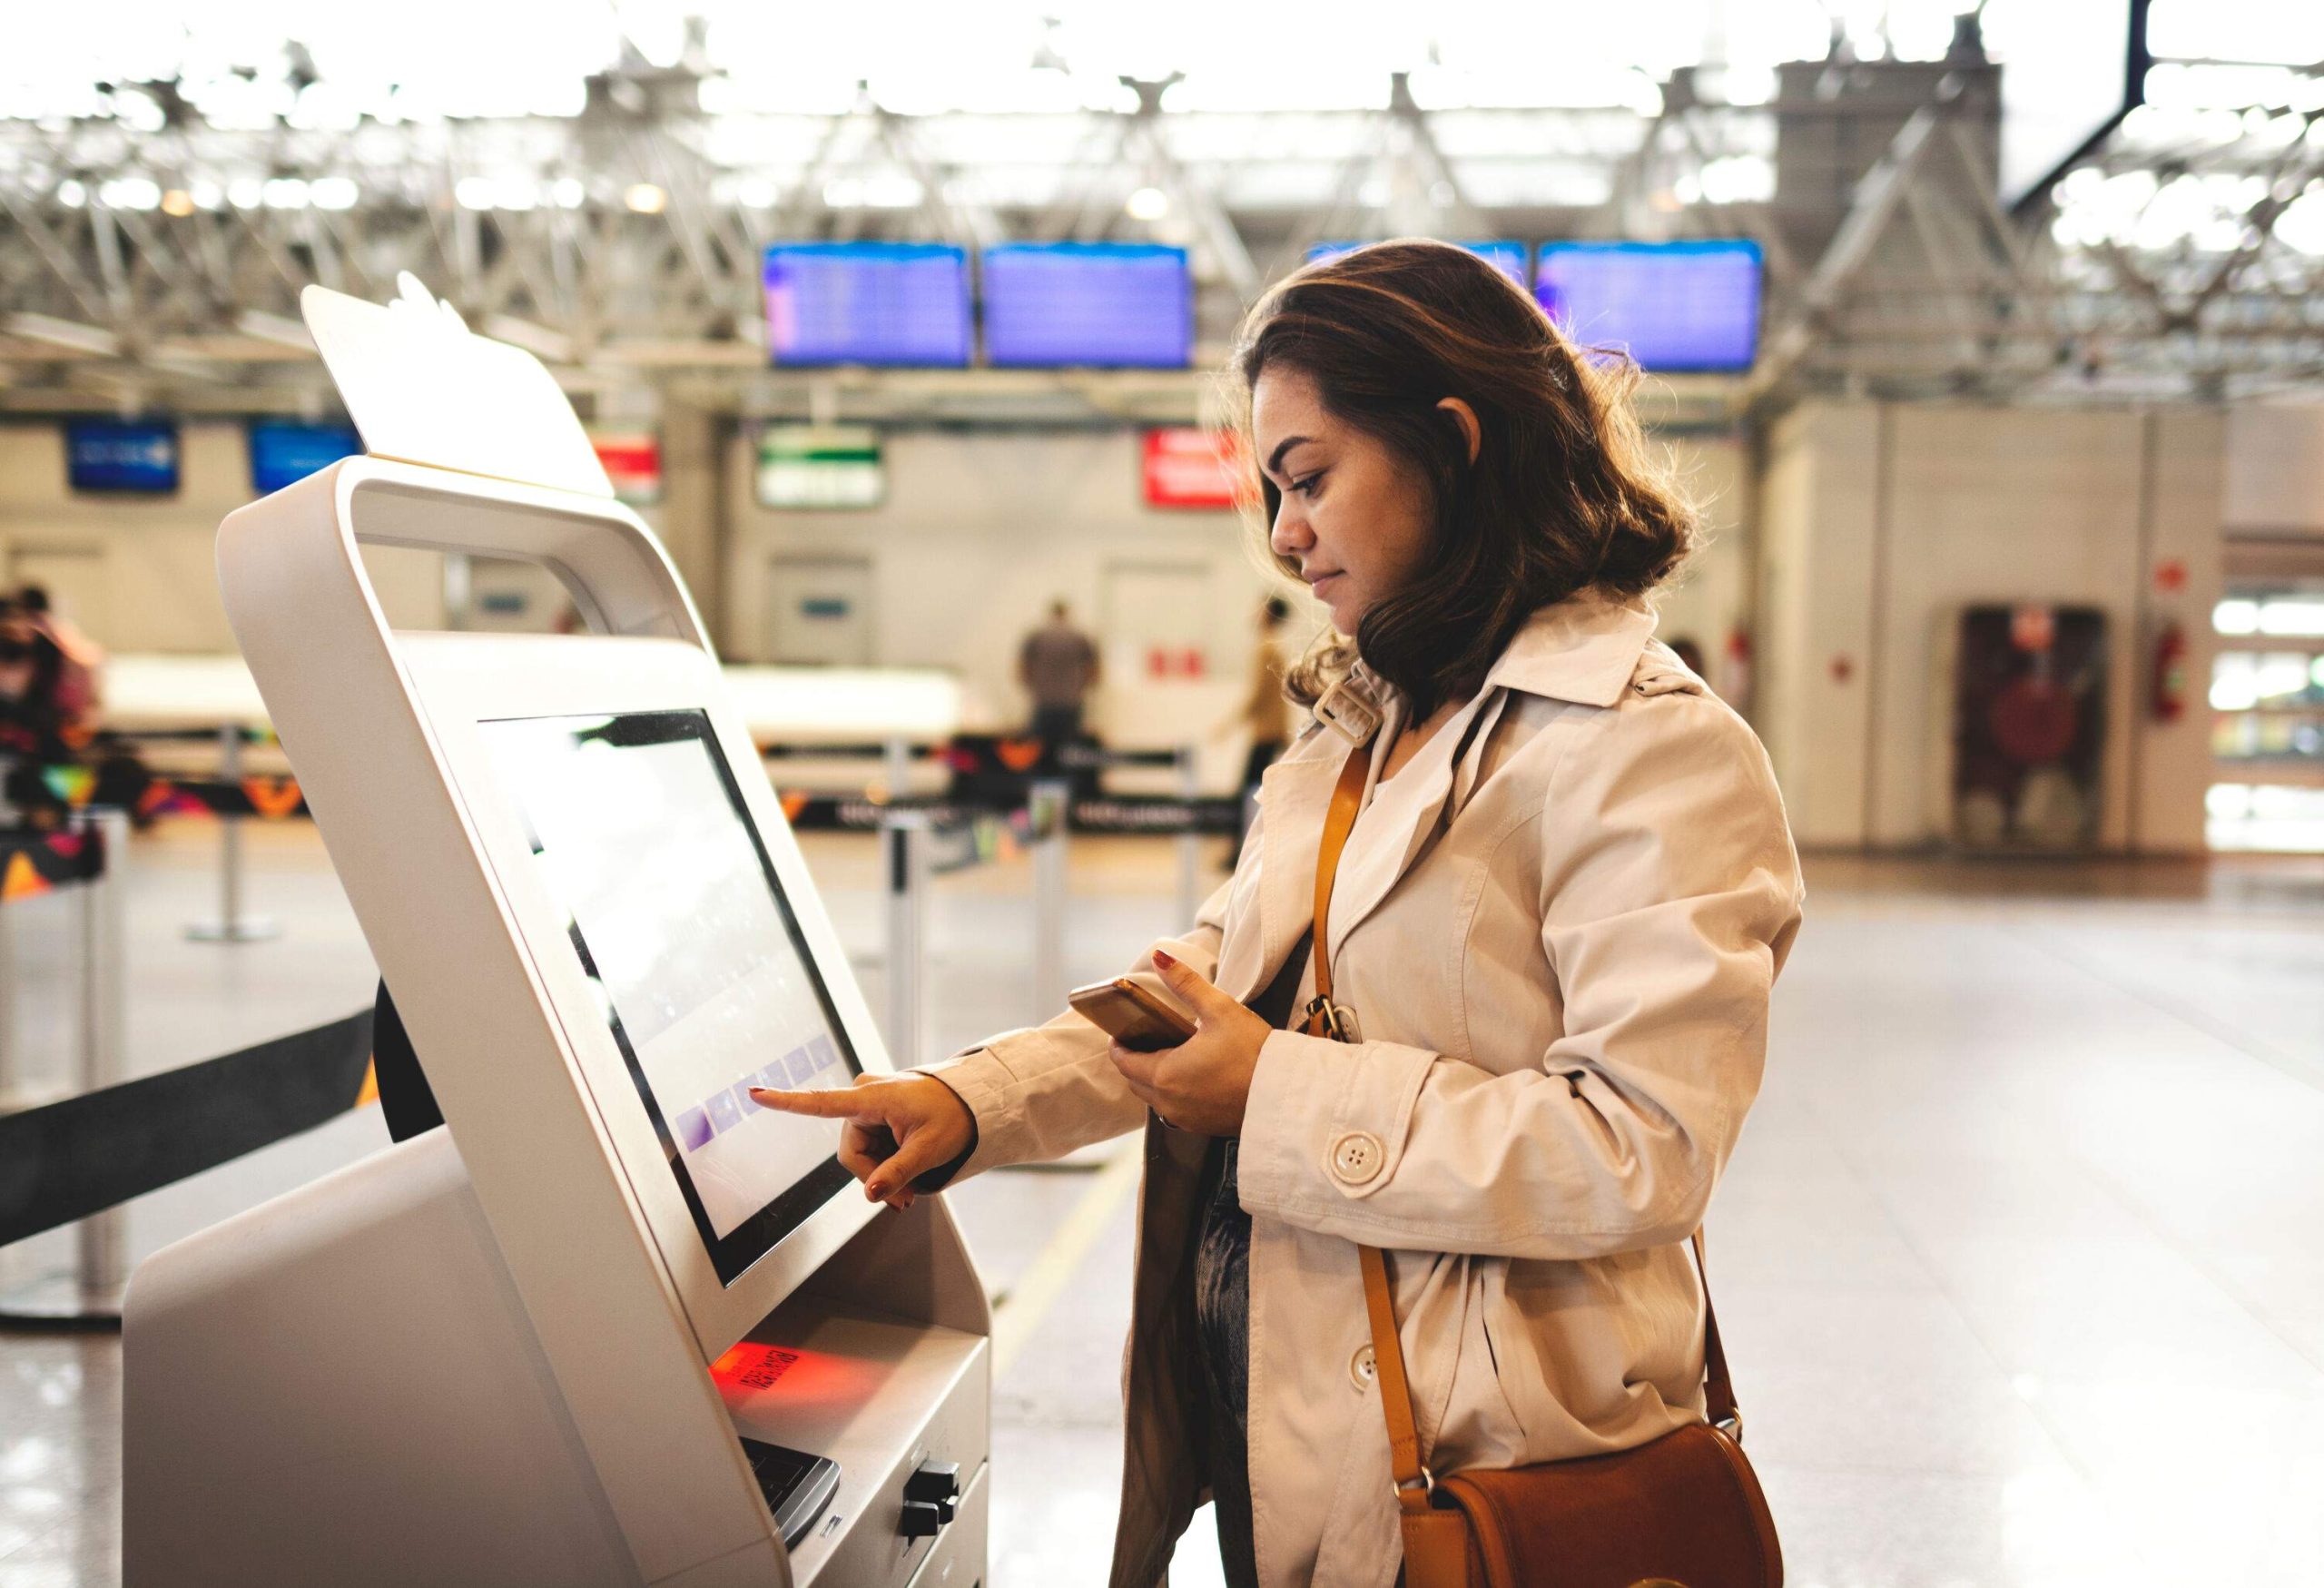 A woman using a modern kiosk in an airport.